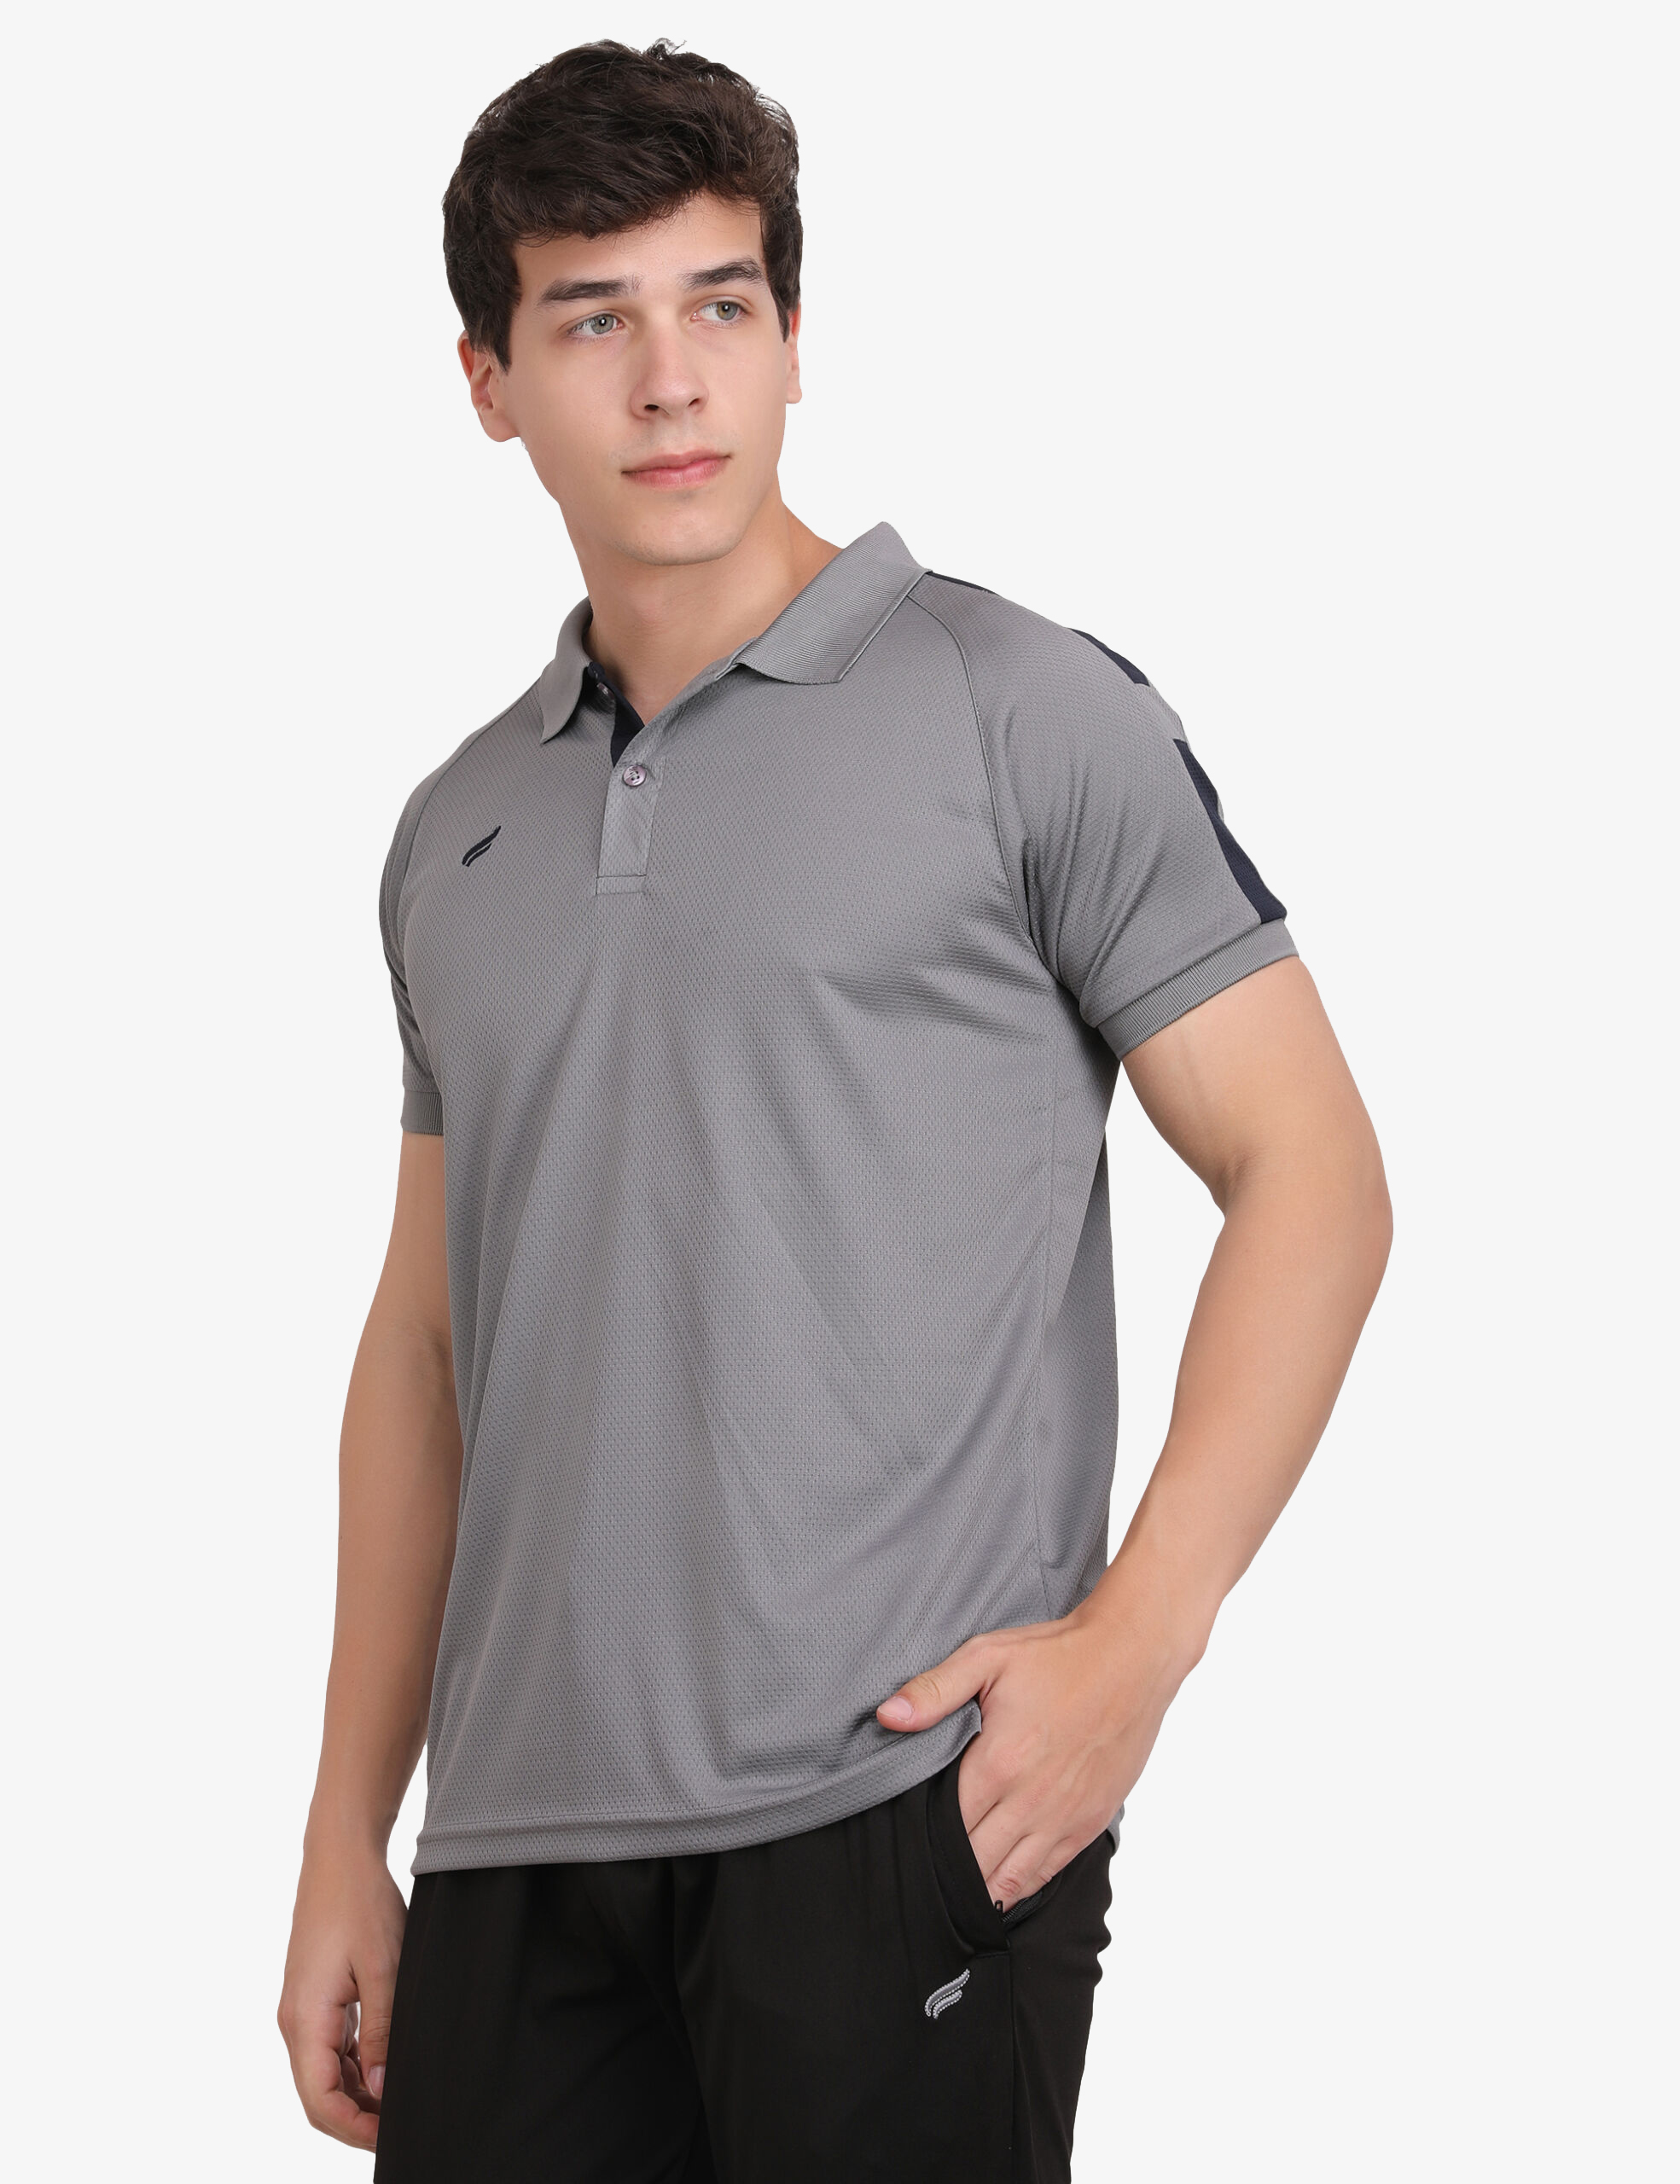 ASI Cruiser Light Grey Sports T-shirt for Men